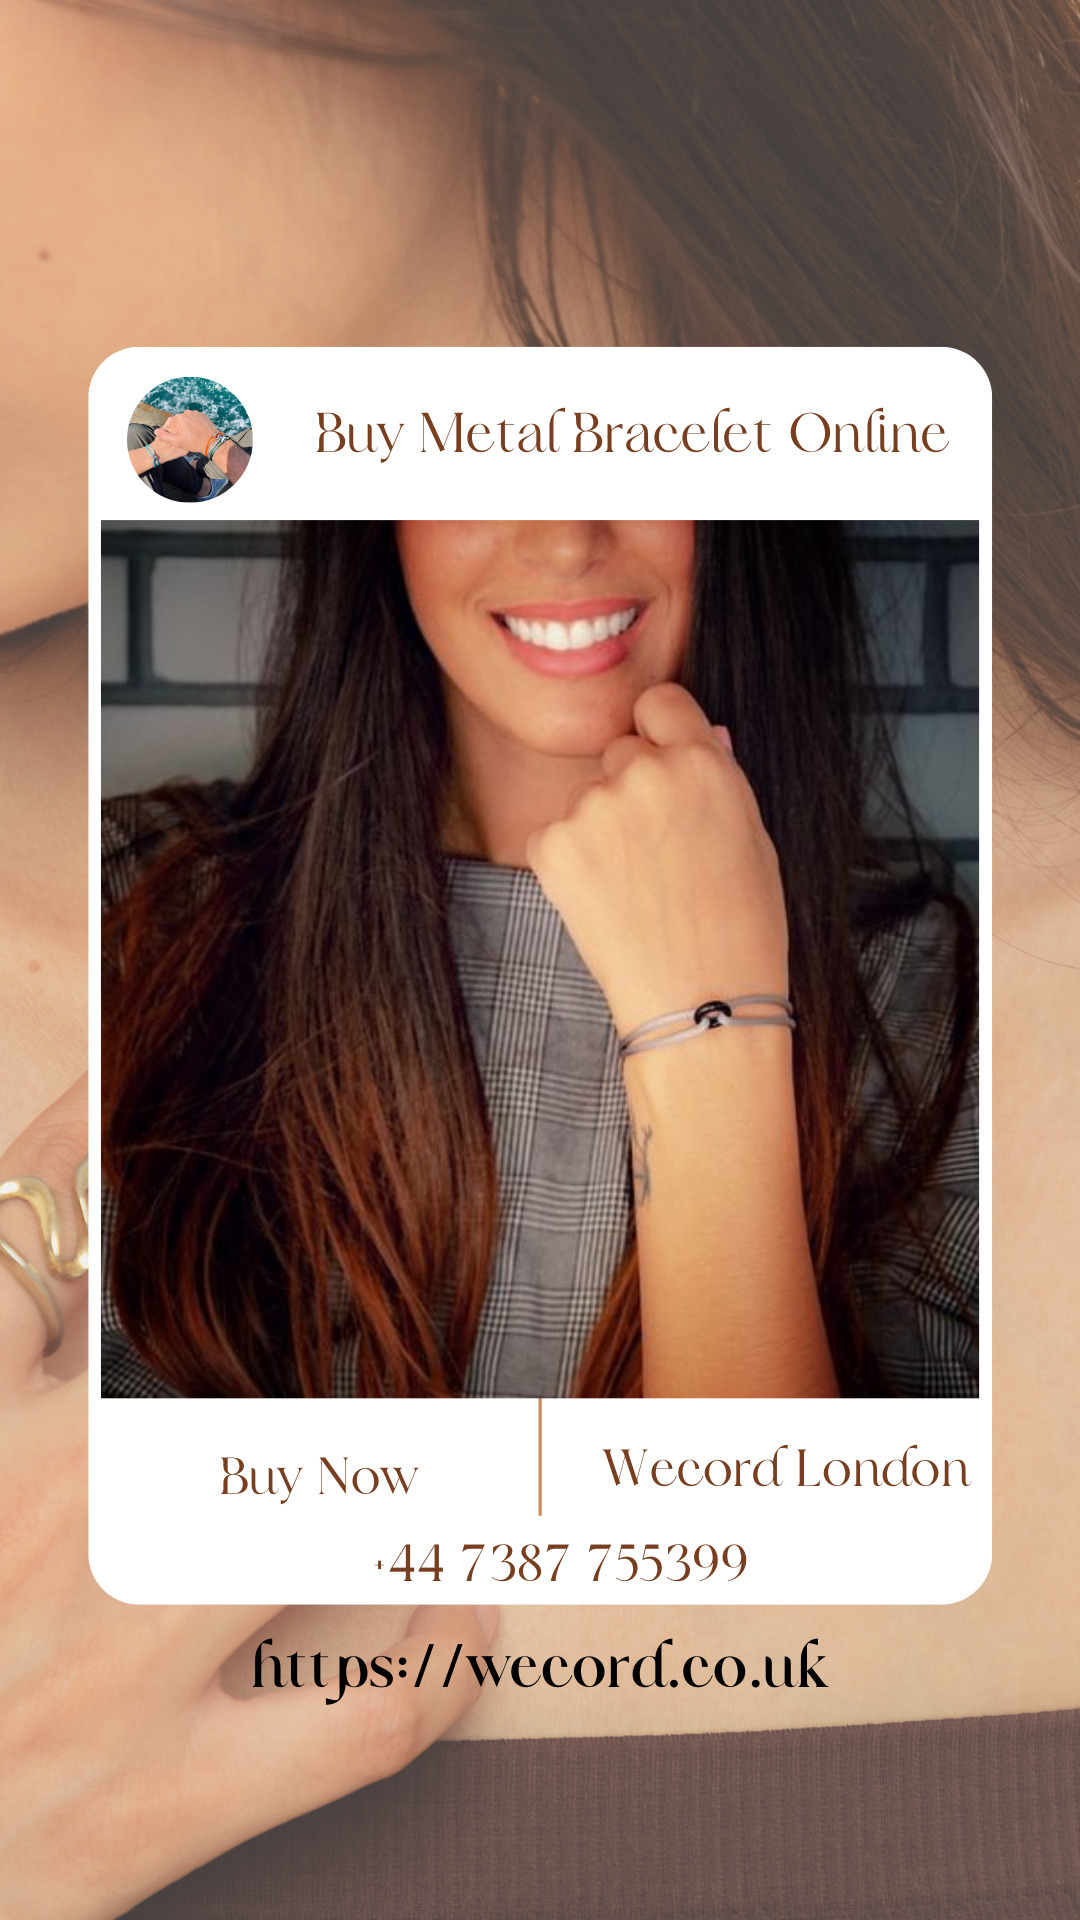 Buy Metal Bracelet Online - Wecord London | Wec...